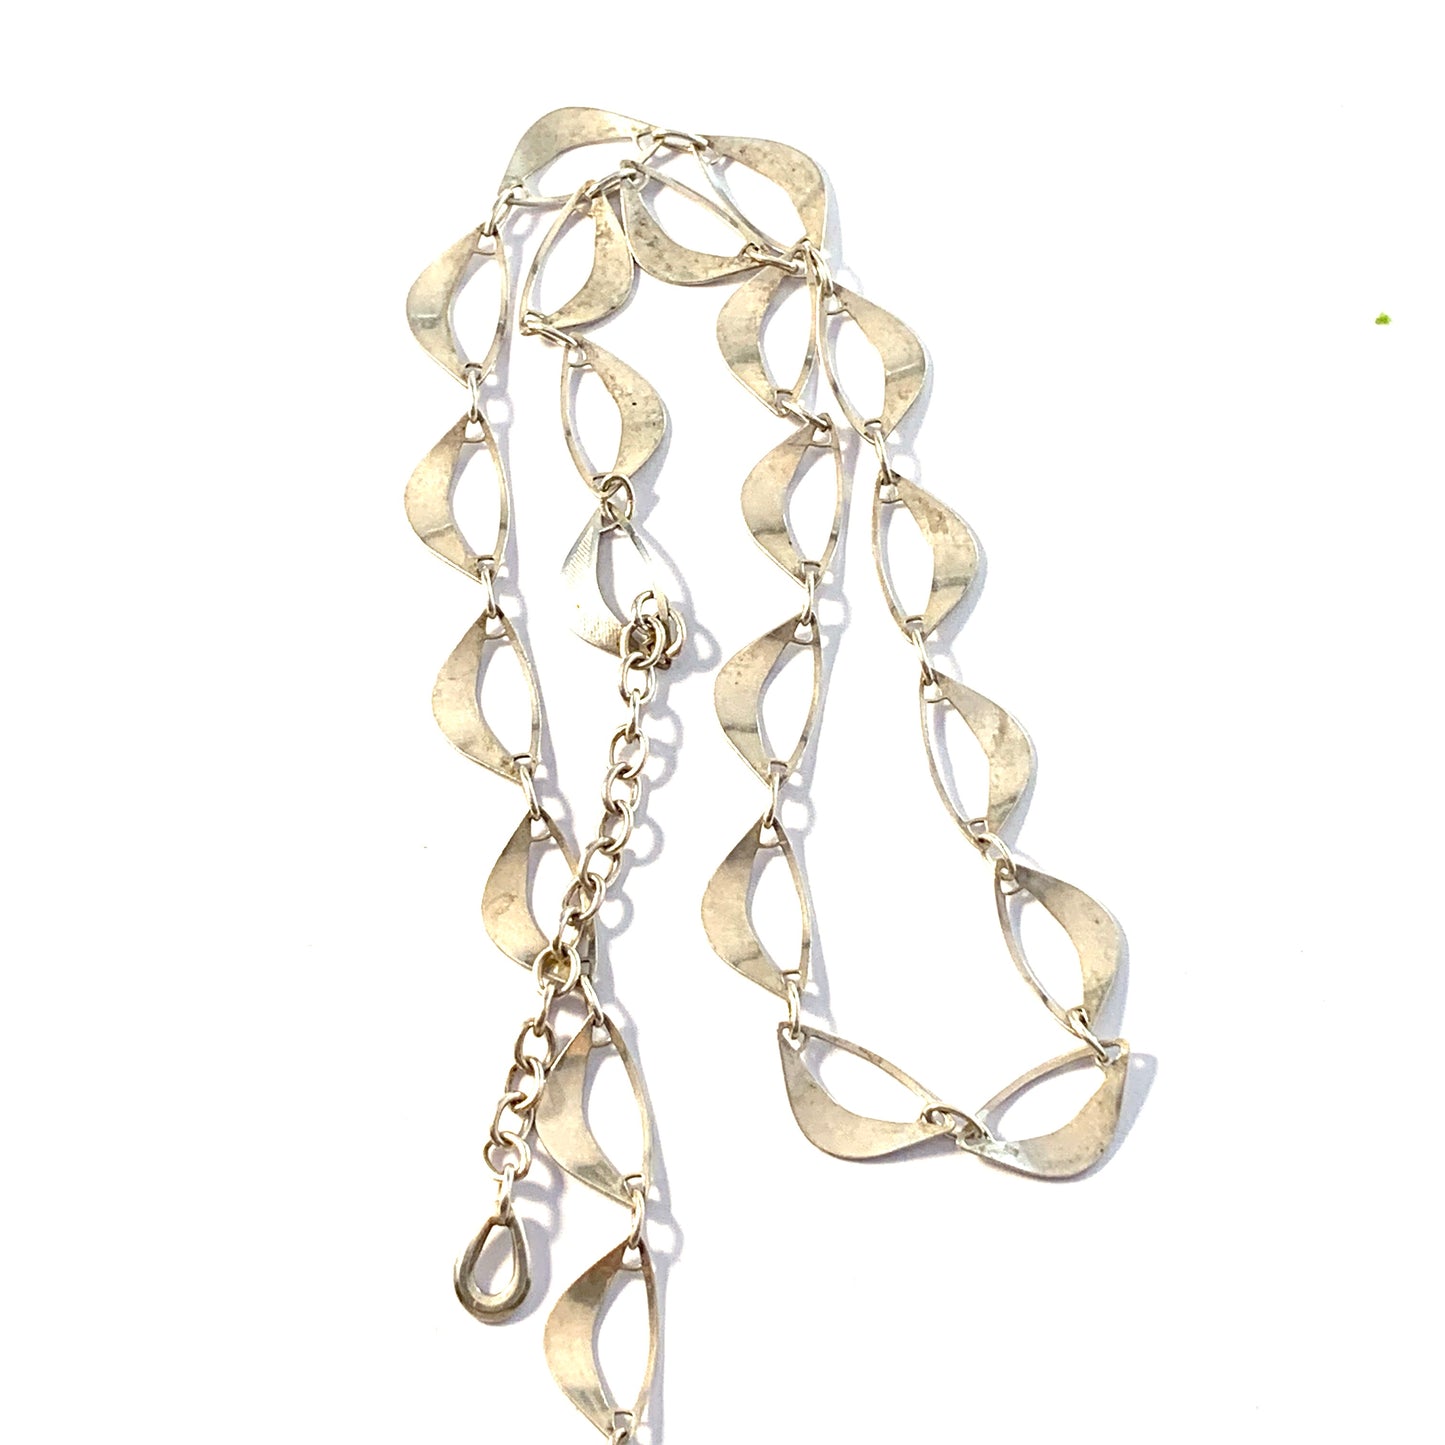 Friedrich Binder, Germany Vintage 1950s Solid Silver Necklace.